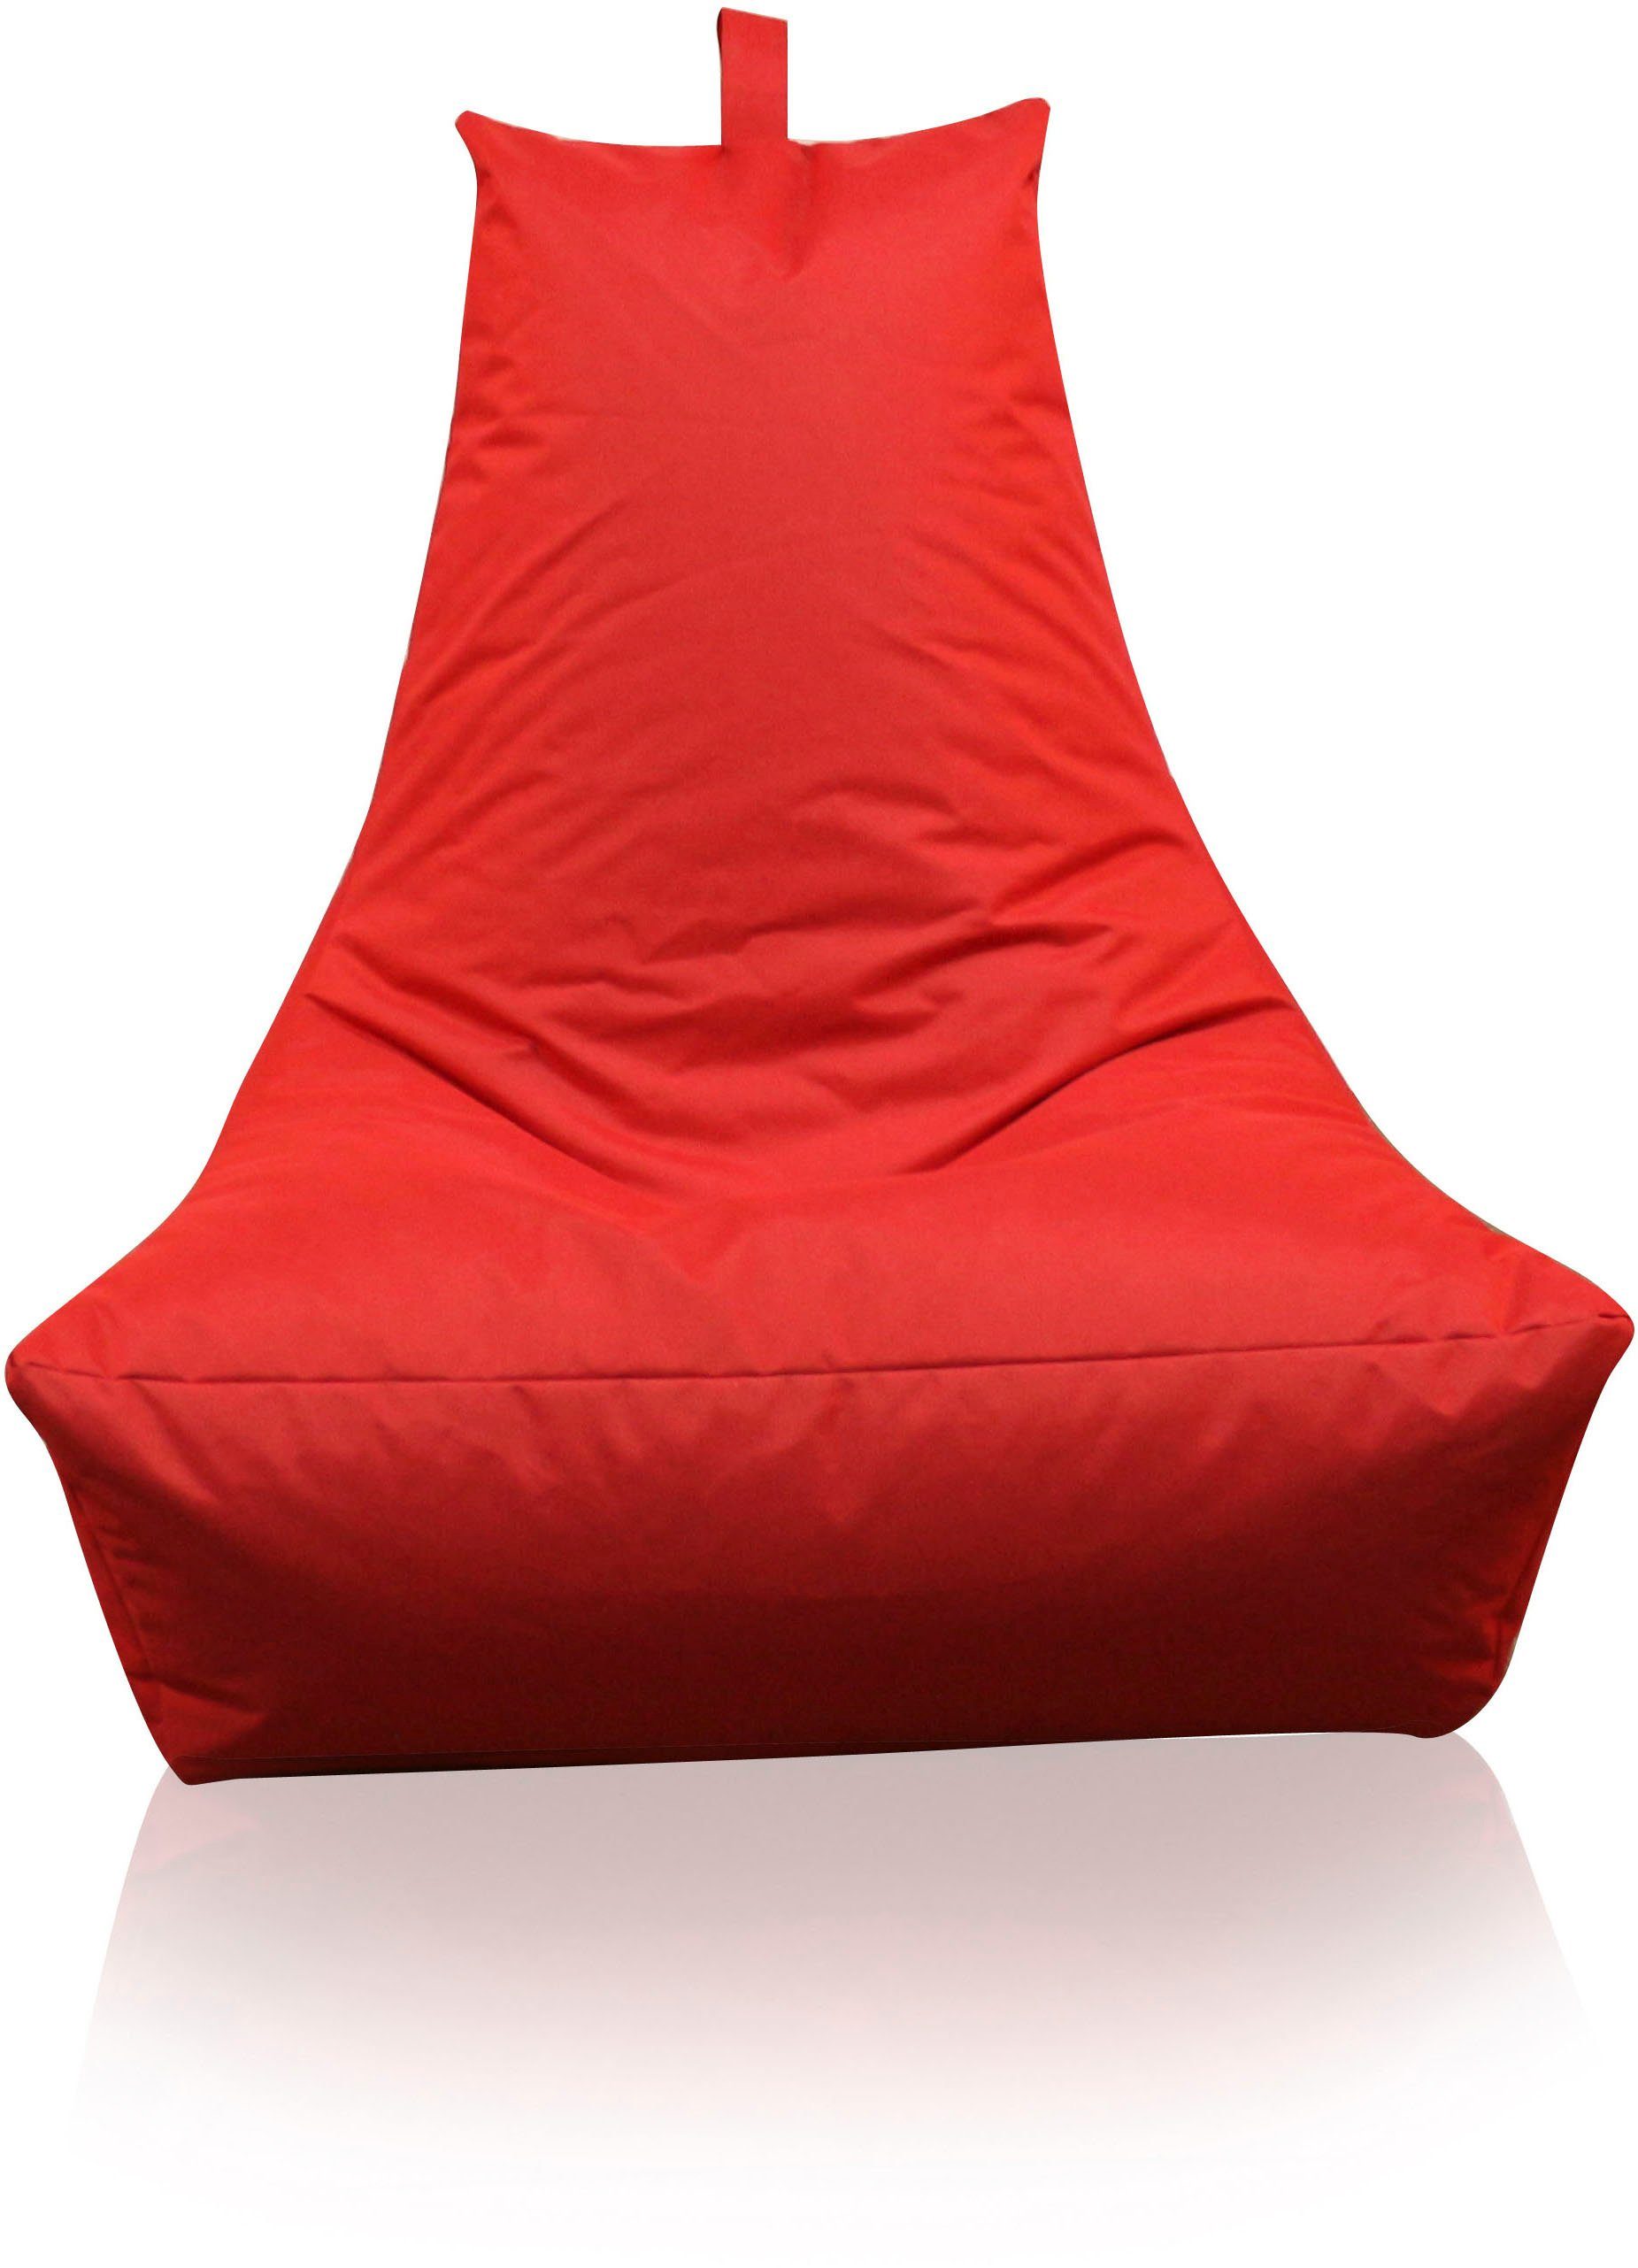 KiNZLER Sitzsack Lounge (1 St) rot